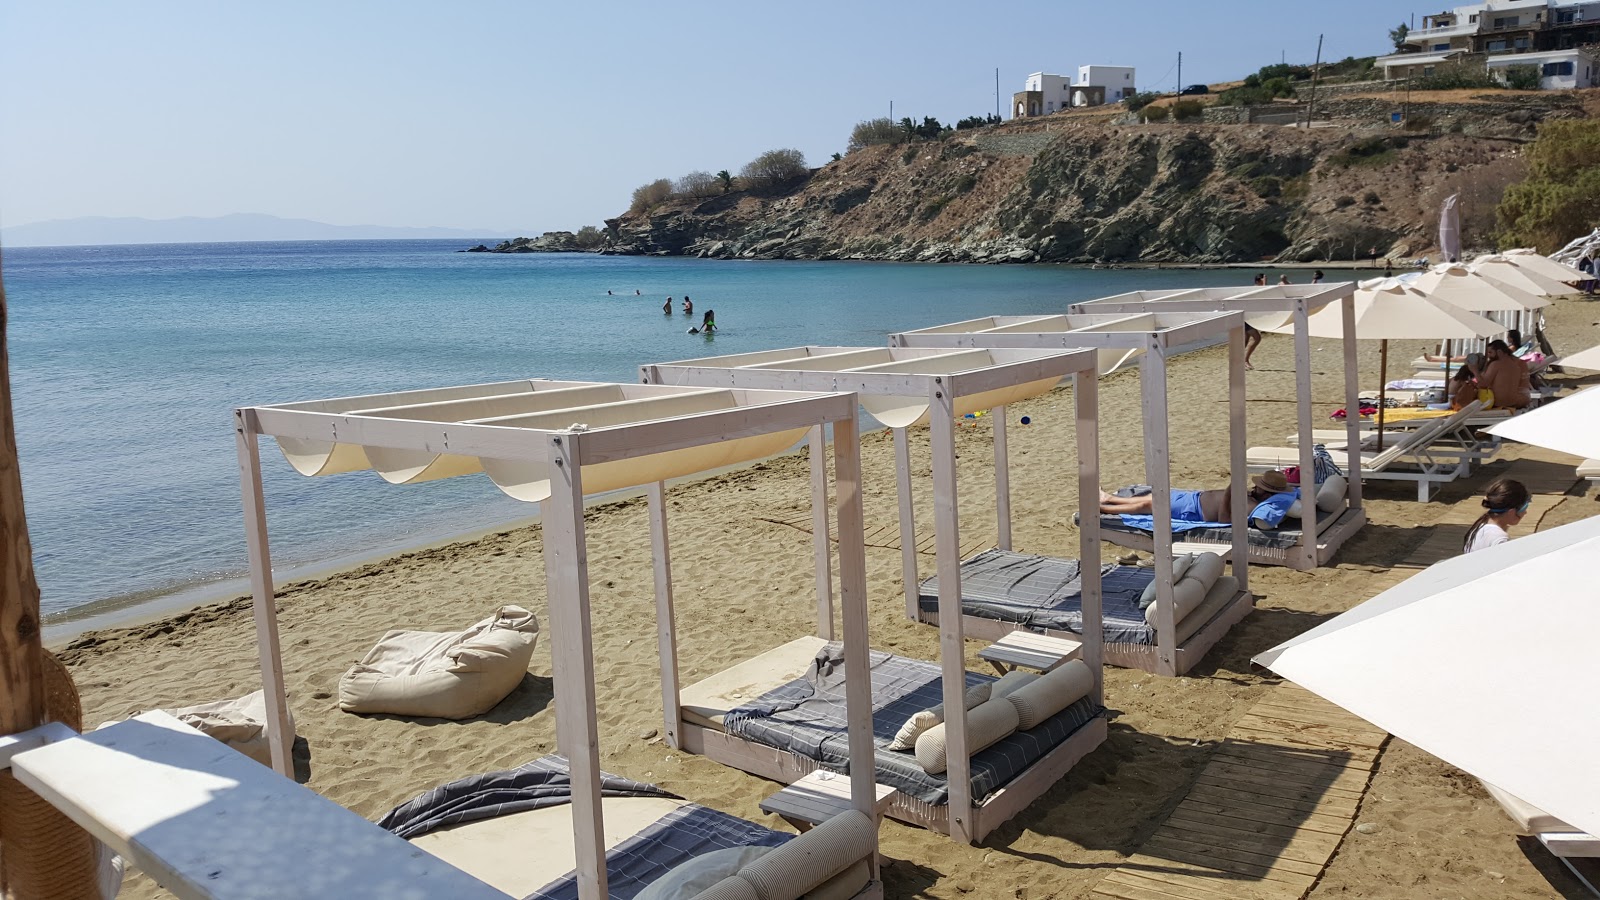 Foto de Praia de Agios Romanos - lugar popular entre os apreciadores de relaxamento